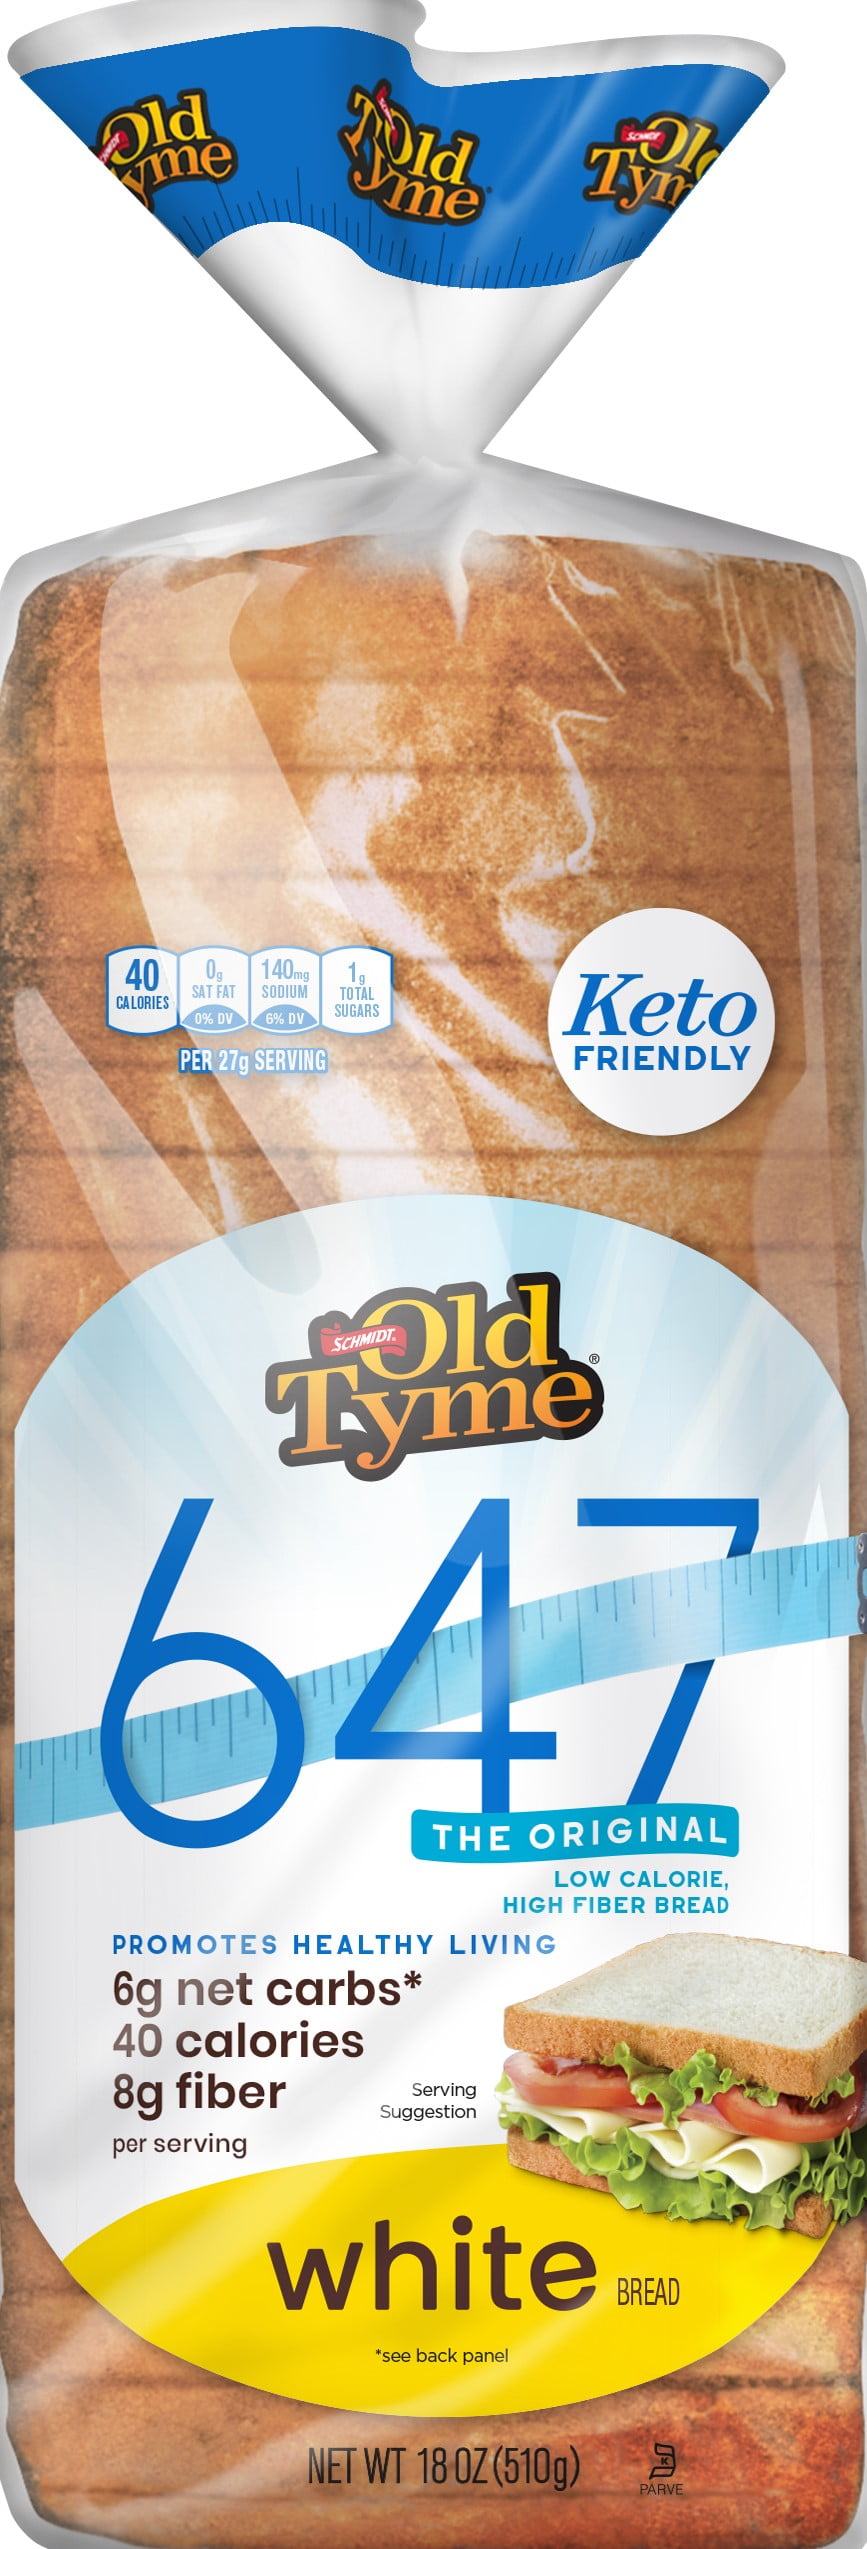 Schmidt Old Tyme 647 White Bread Loaf, 18 oz, 18 Count